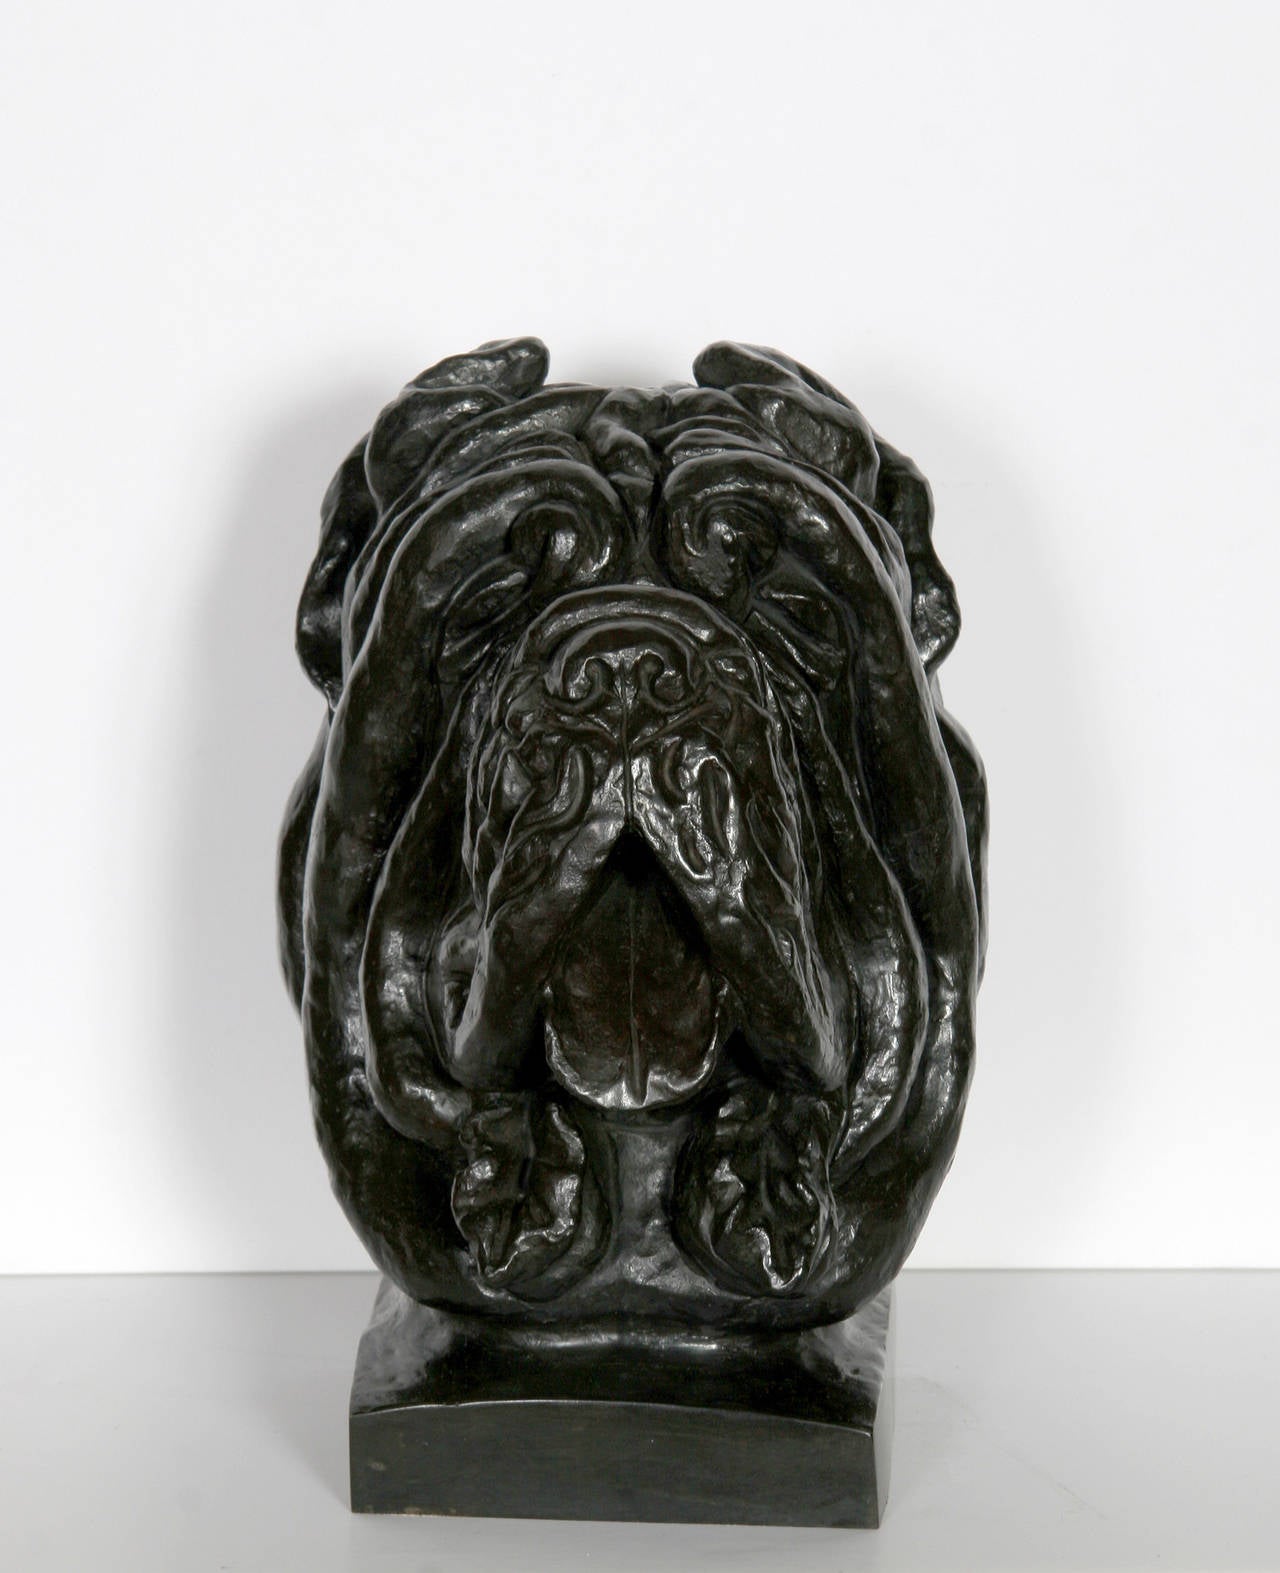 Cane Corso Dog Bust, Patinated Bronze Sculpture